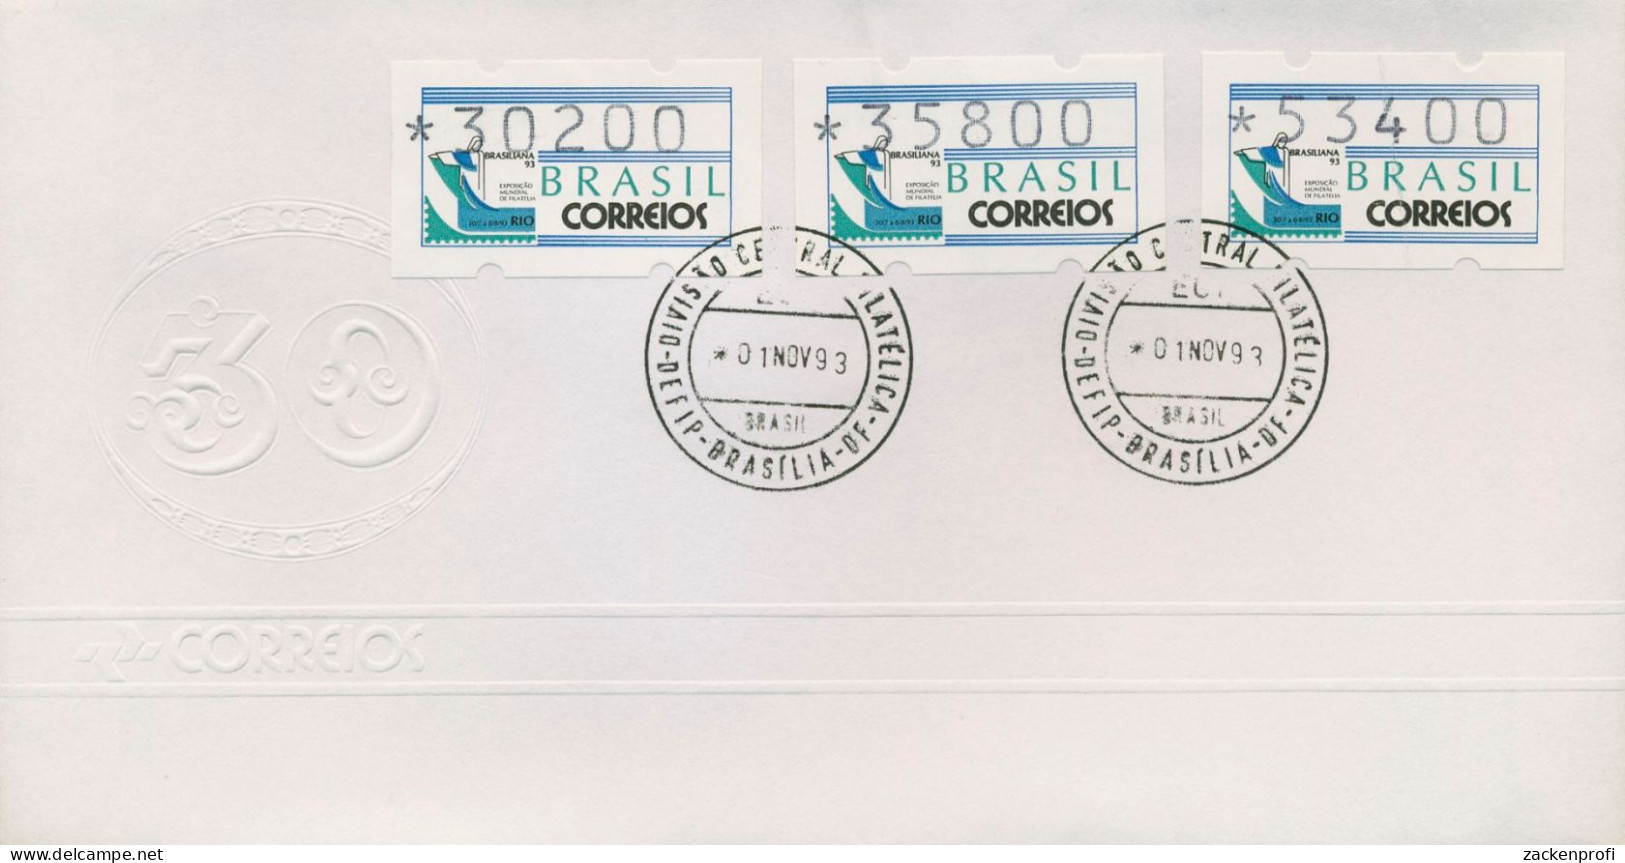 Brasilien 1993 Automatenmarken Satz 30200/35800/53400 ATM 5 S5 FDC (X80266) - Franking Labels